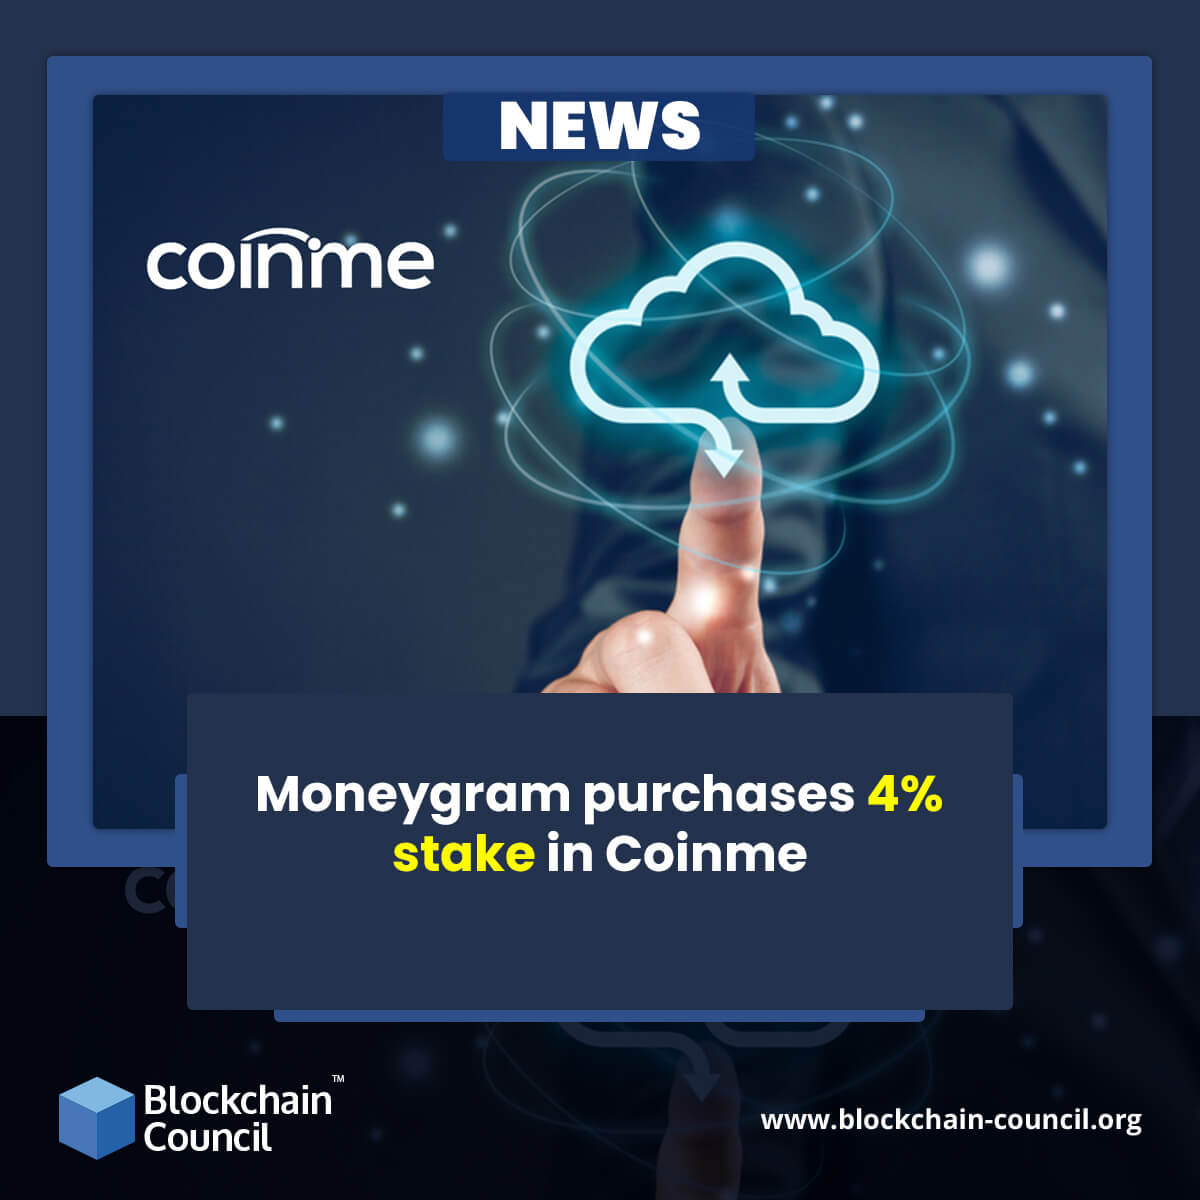 Moneygram purchases 4% stake in Coinme